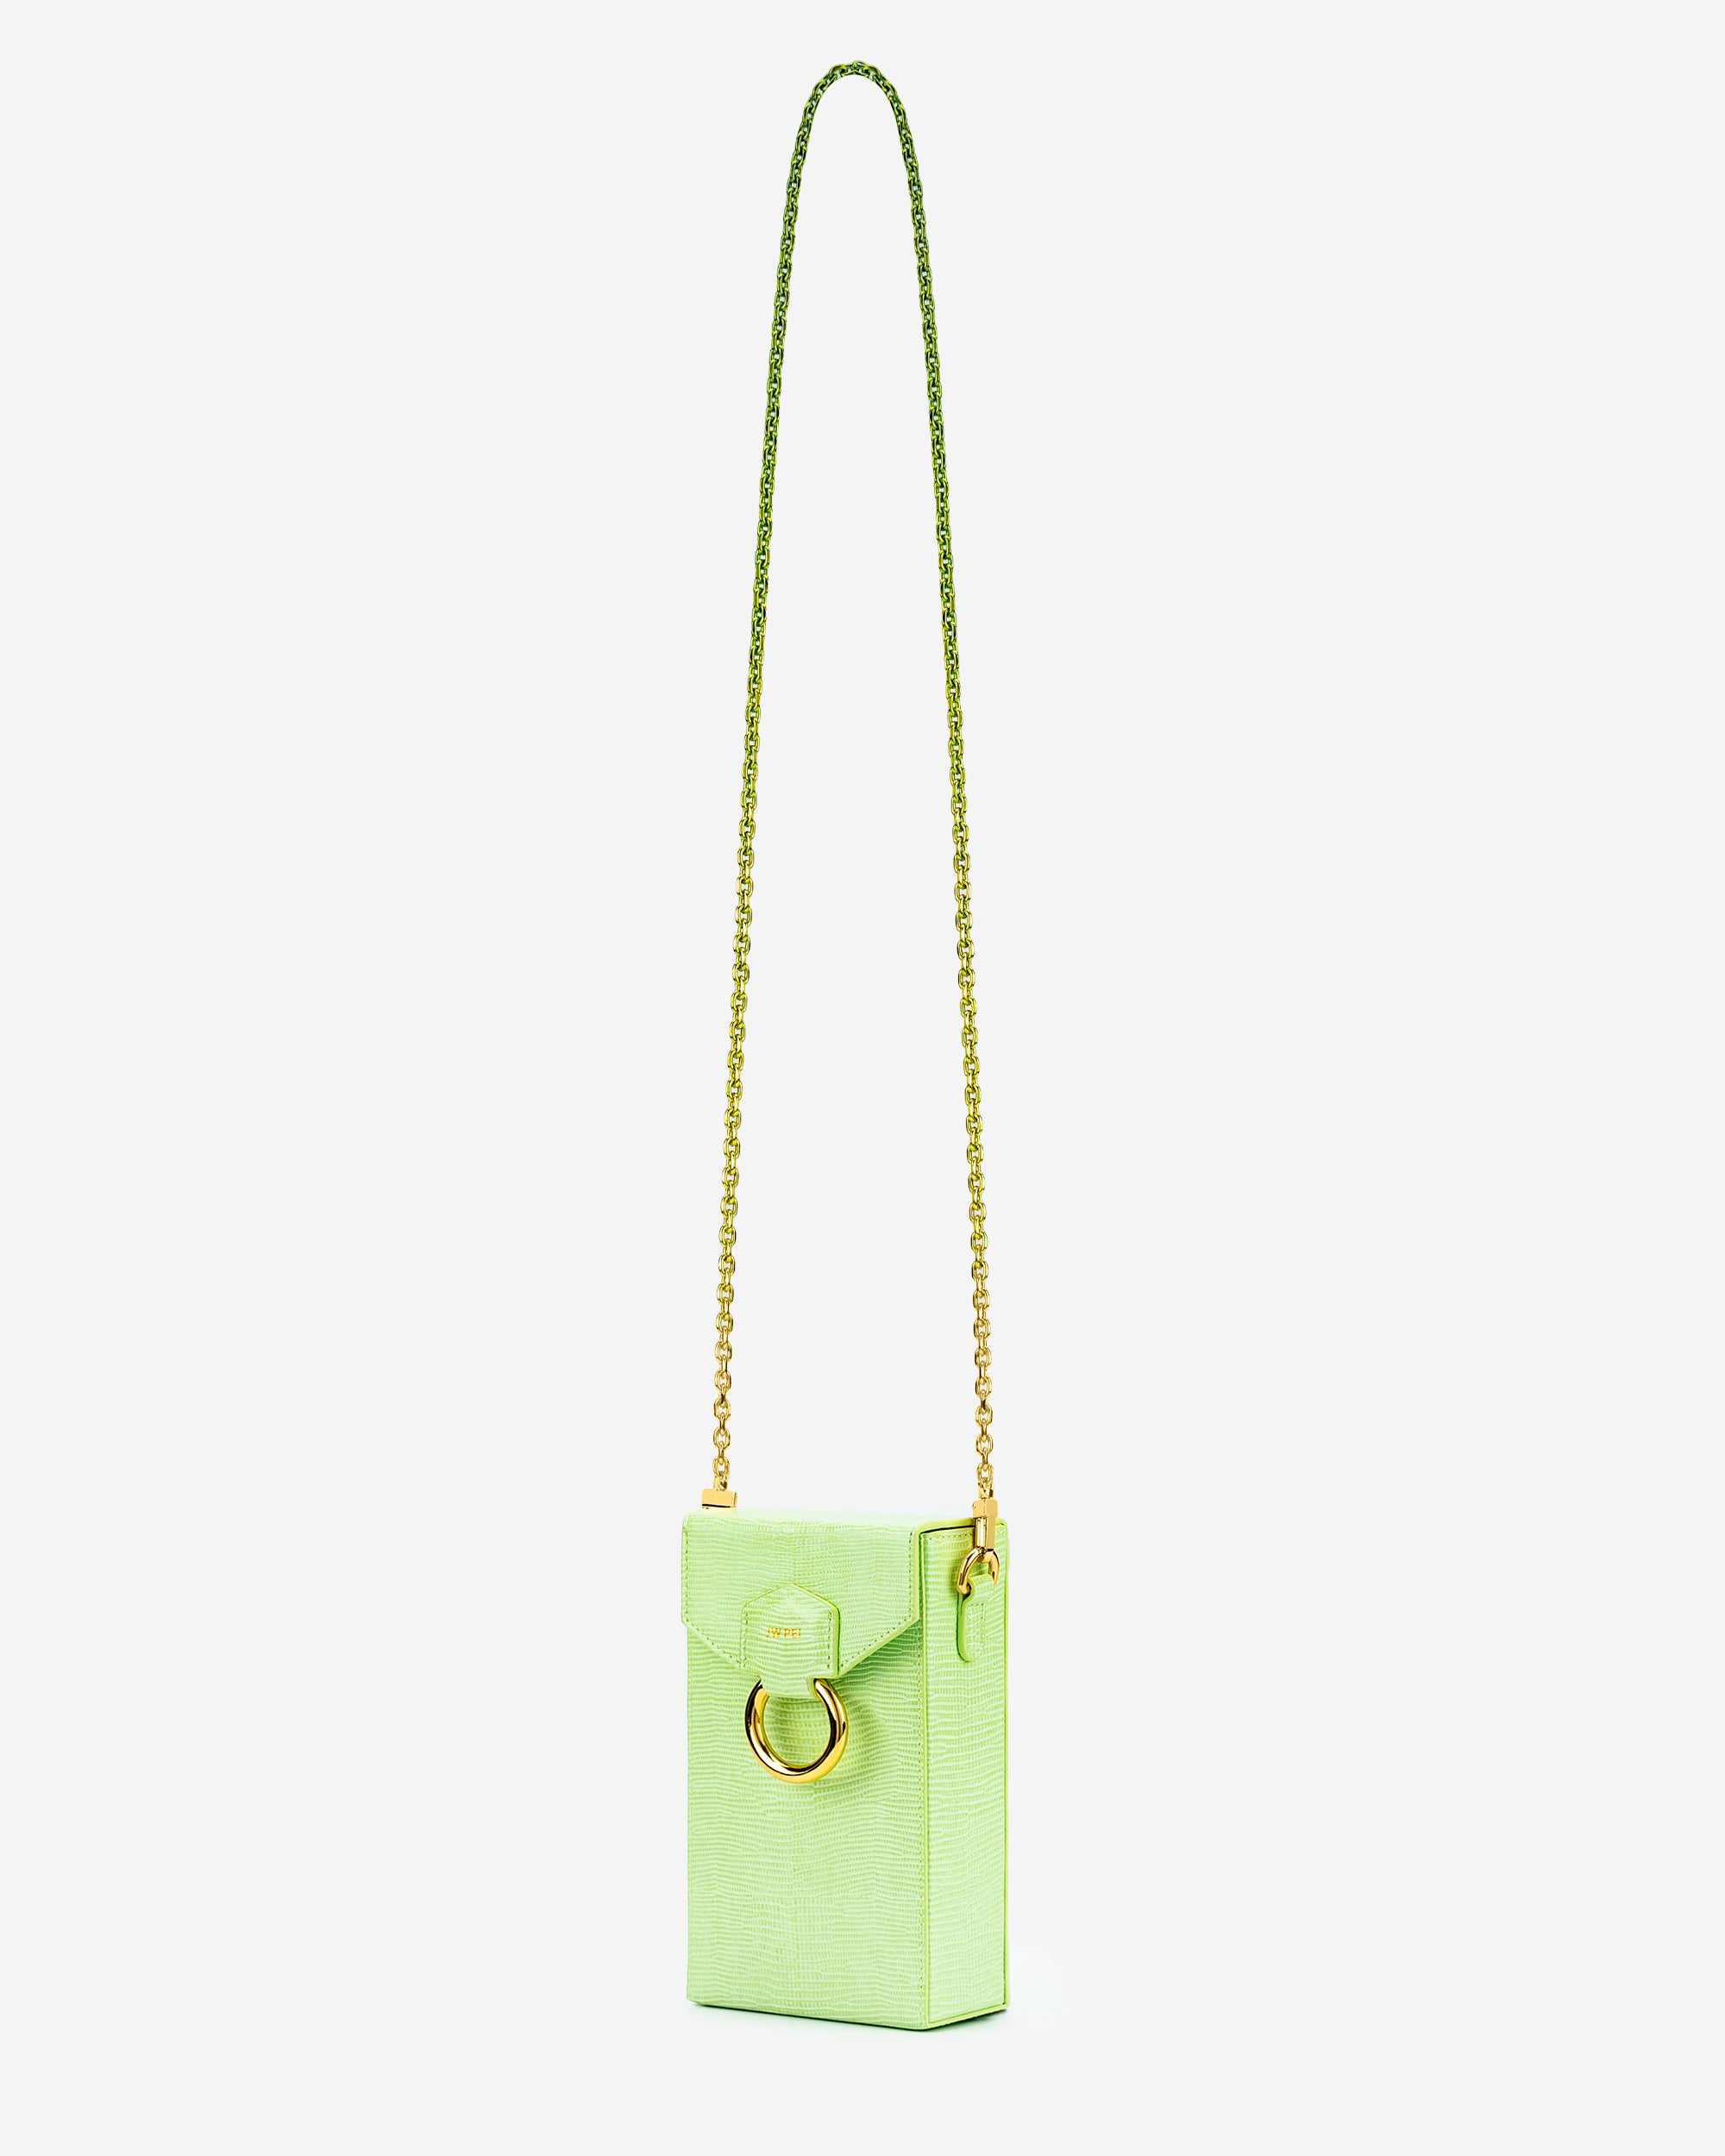 lola 체인 핸드폰 가방 - 라임 그린 도마뱀 무늬